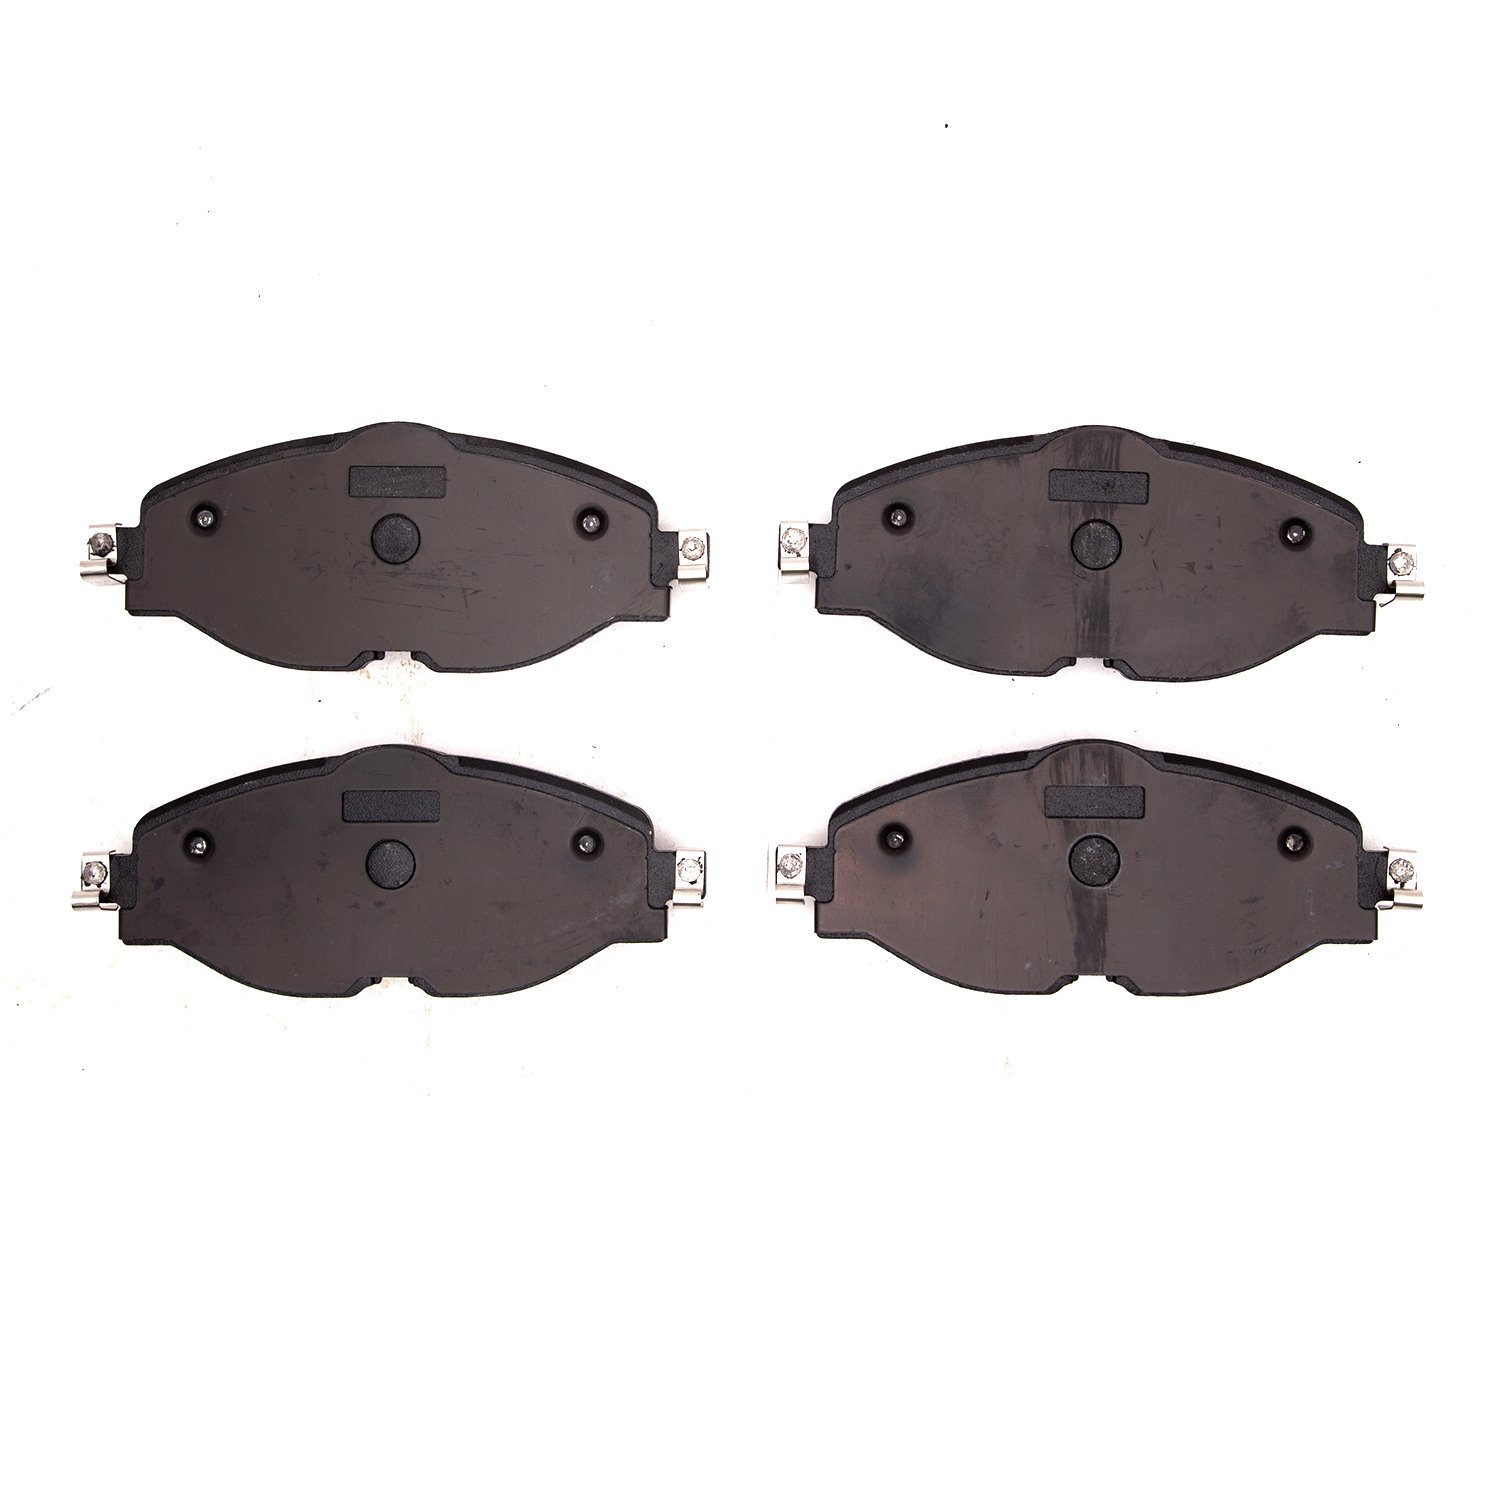 1551-1760-00 5000 Advanced Ceramic Brake Pads, Fits Select Multiple Makes/Models, Position: Front